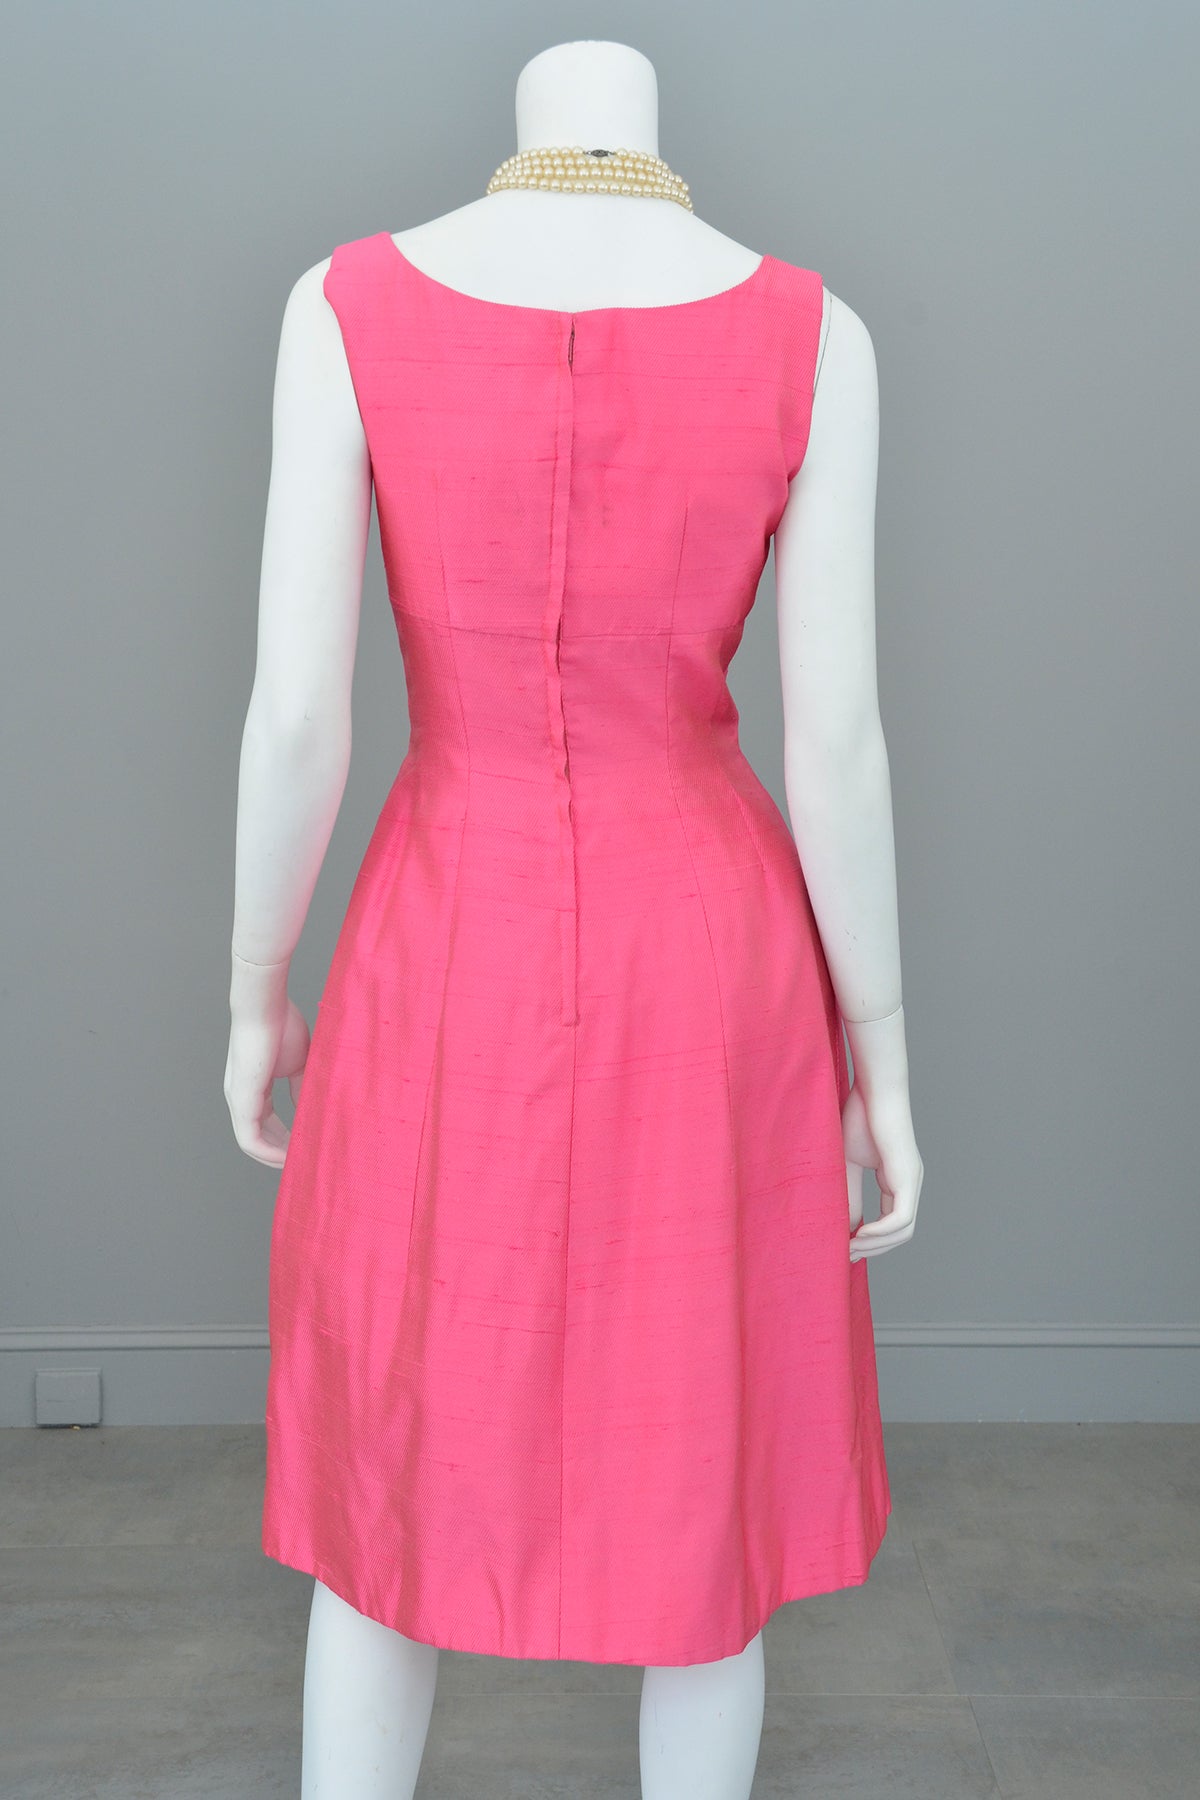 1960s Hot Pink Empire Wiggle Dress with Matching Bow Bolero